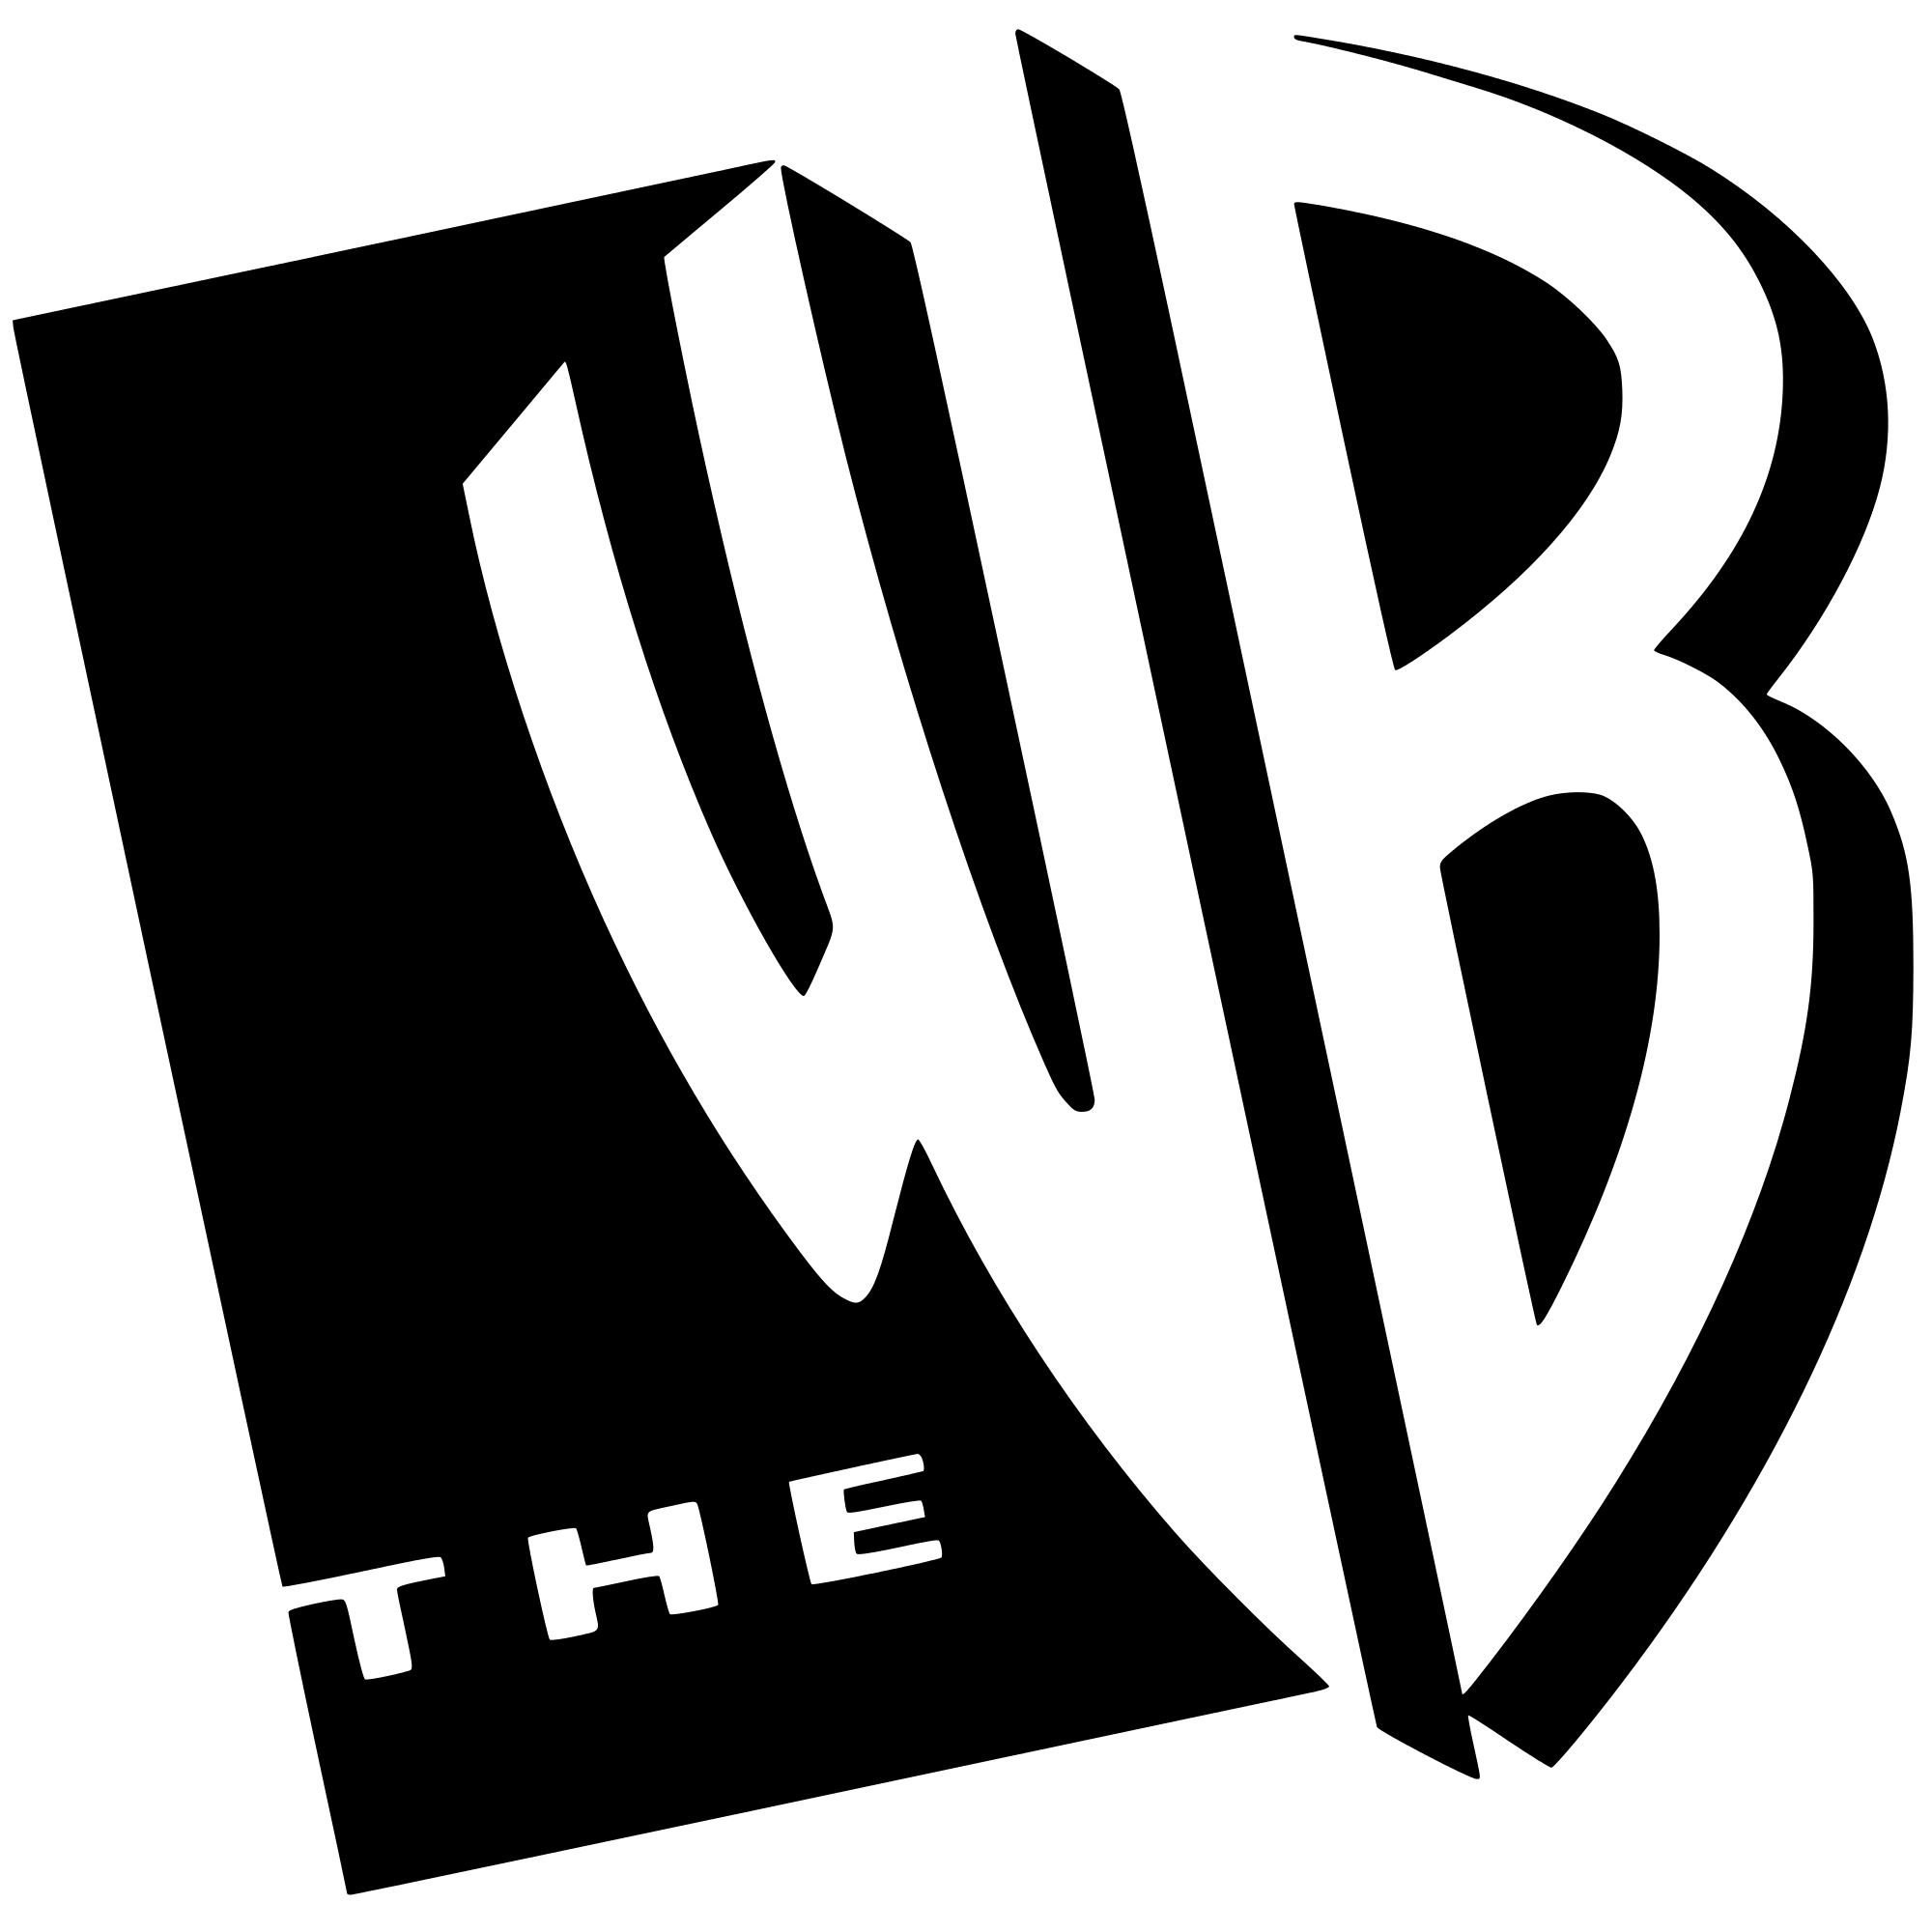 WB Logo - File:The W B logo.svg - Wikimedia Commons